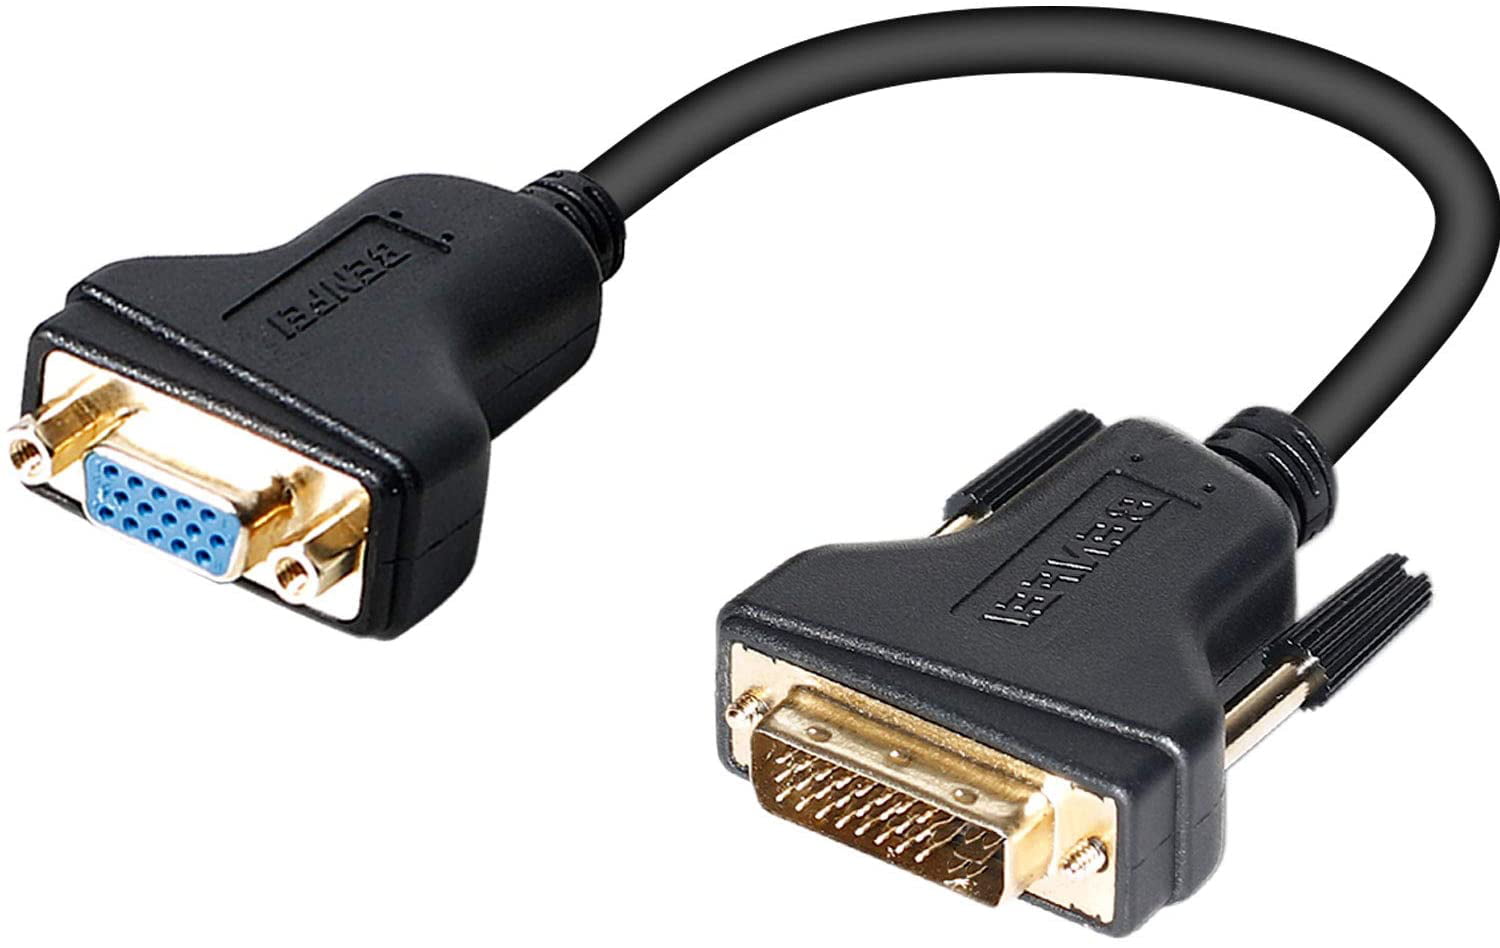 Black TanQY 1 VGA Male to 2 VGA Female VGA Monitor Y Splitter Cable 30cm/1ft